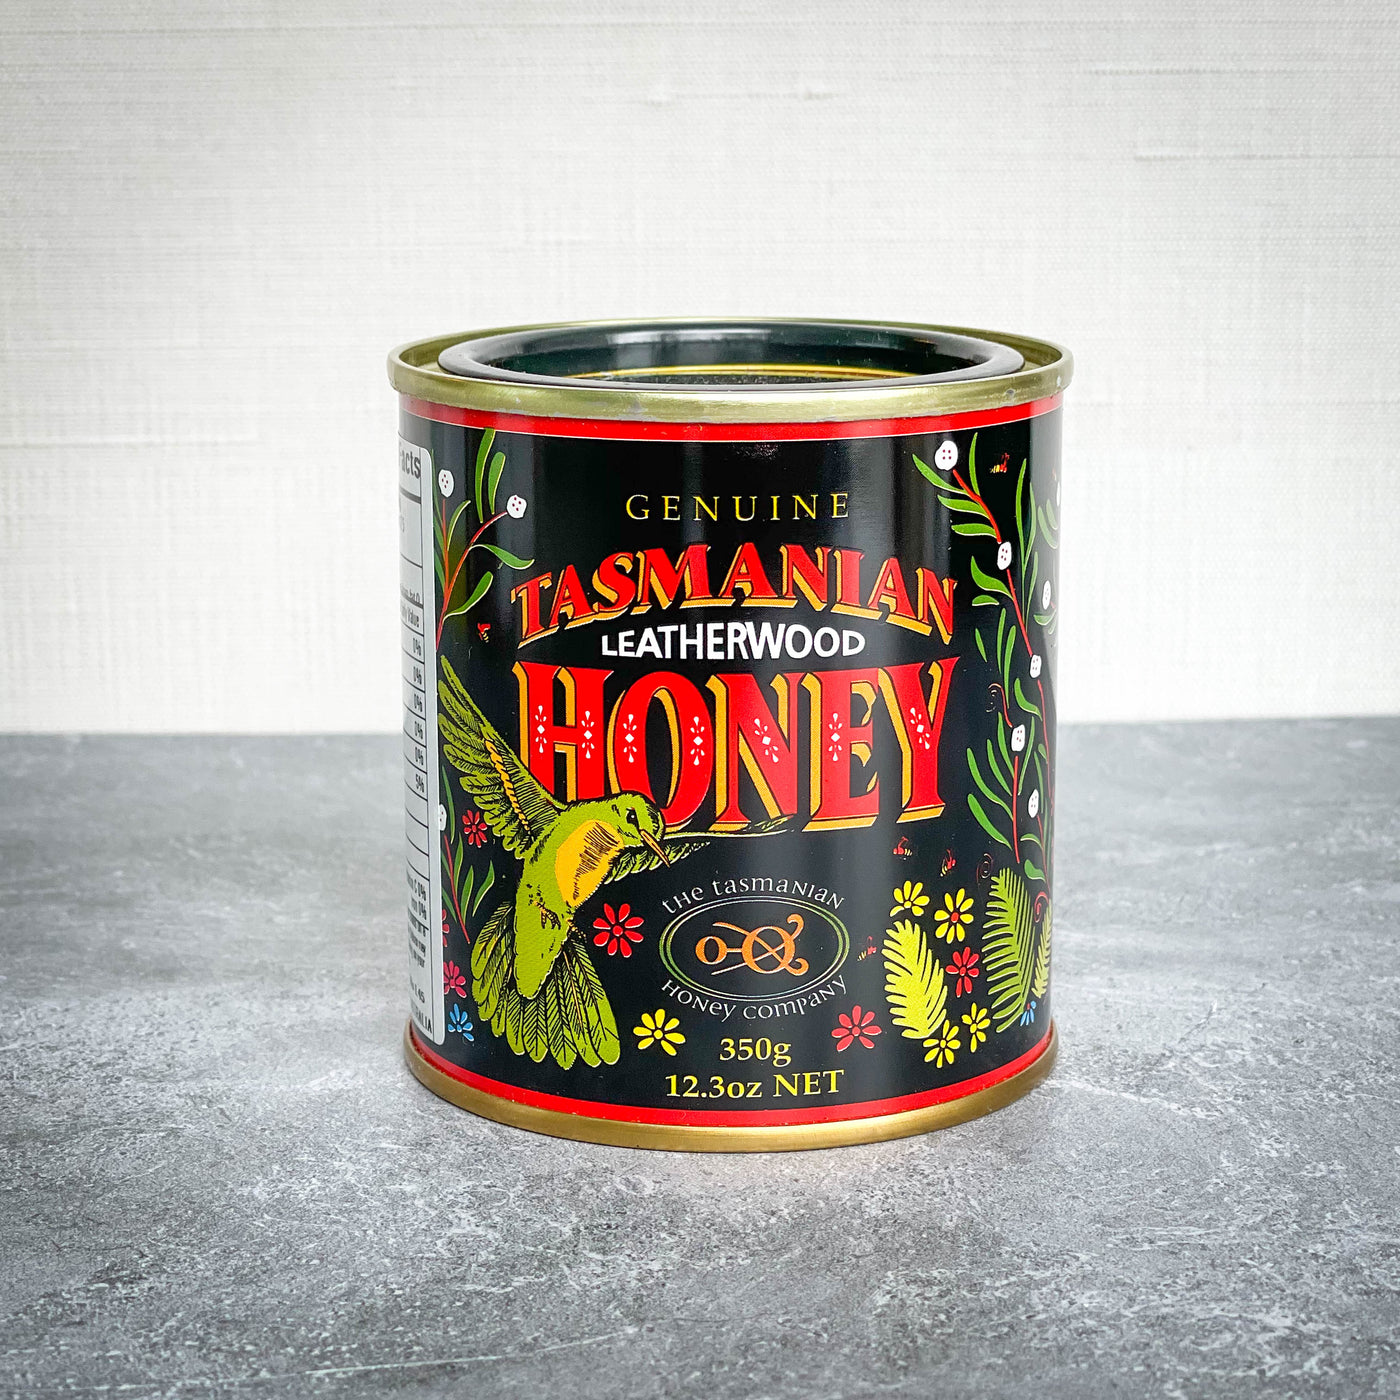 TASMANIAN LEATHERWOOD HONEY / Tasmanian Leatherwood Honey Co